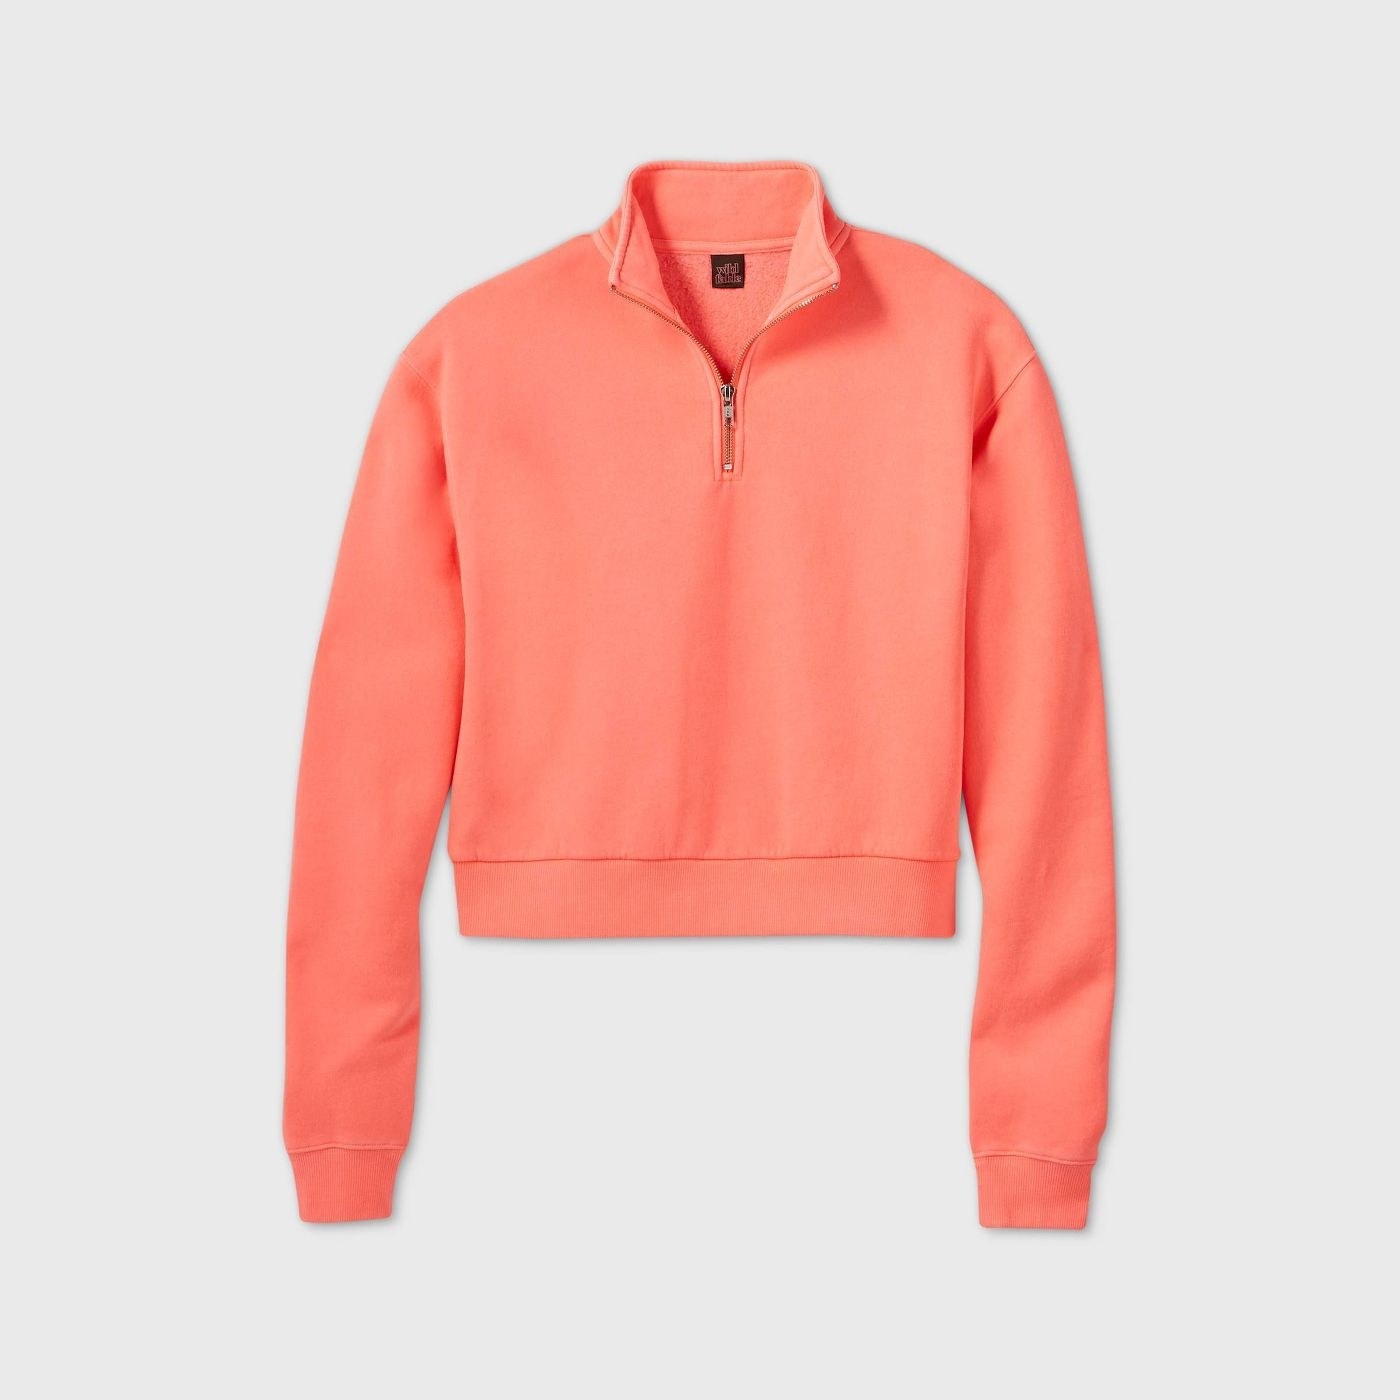 the orange sweater 